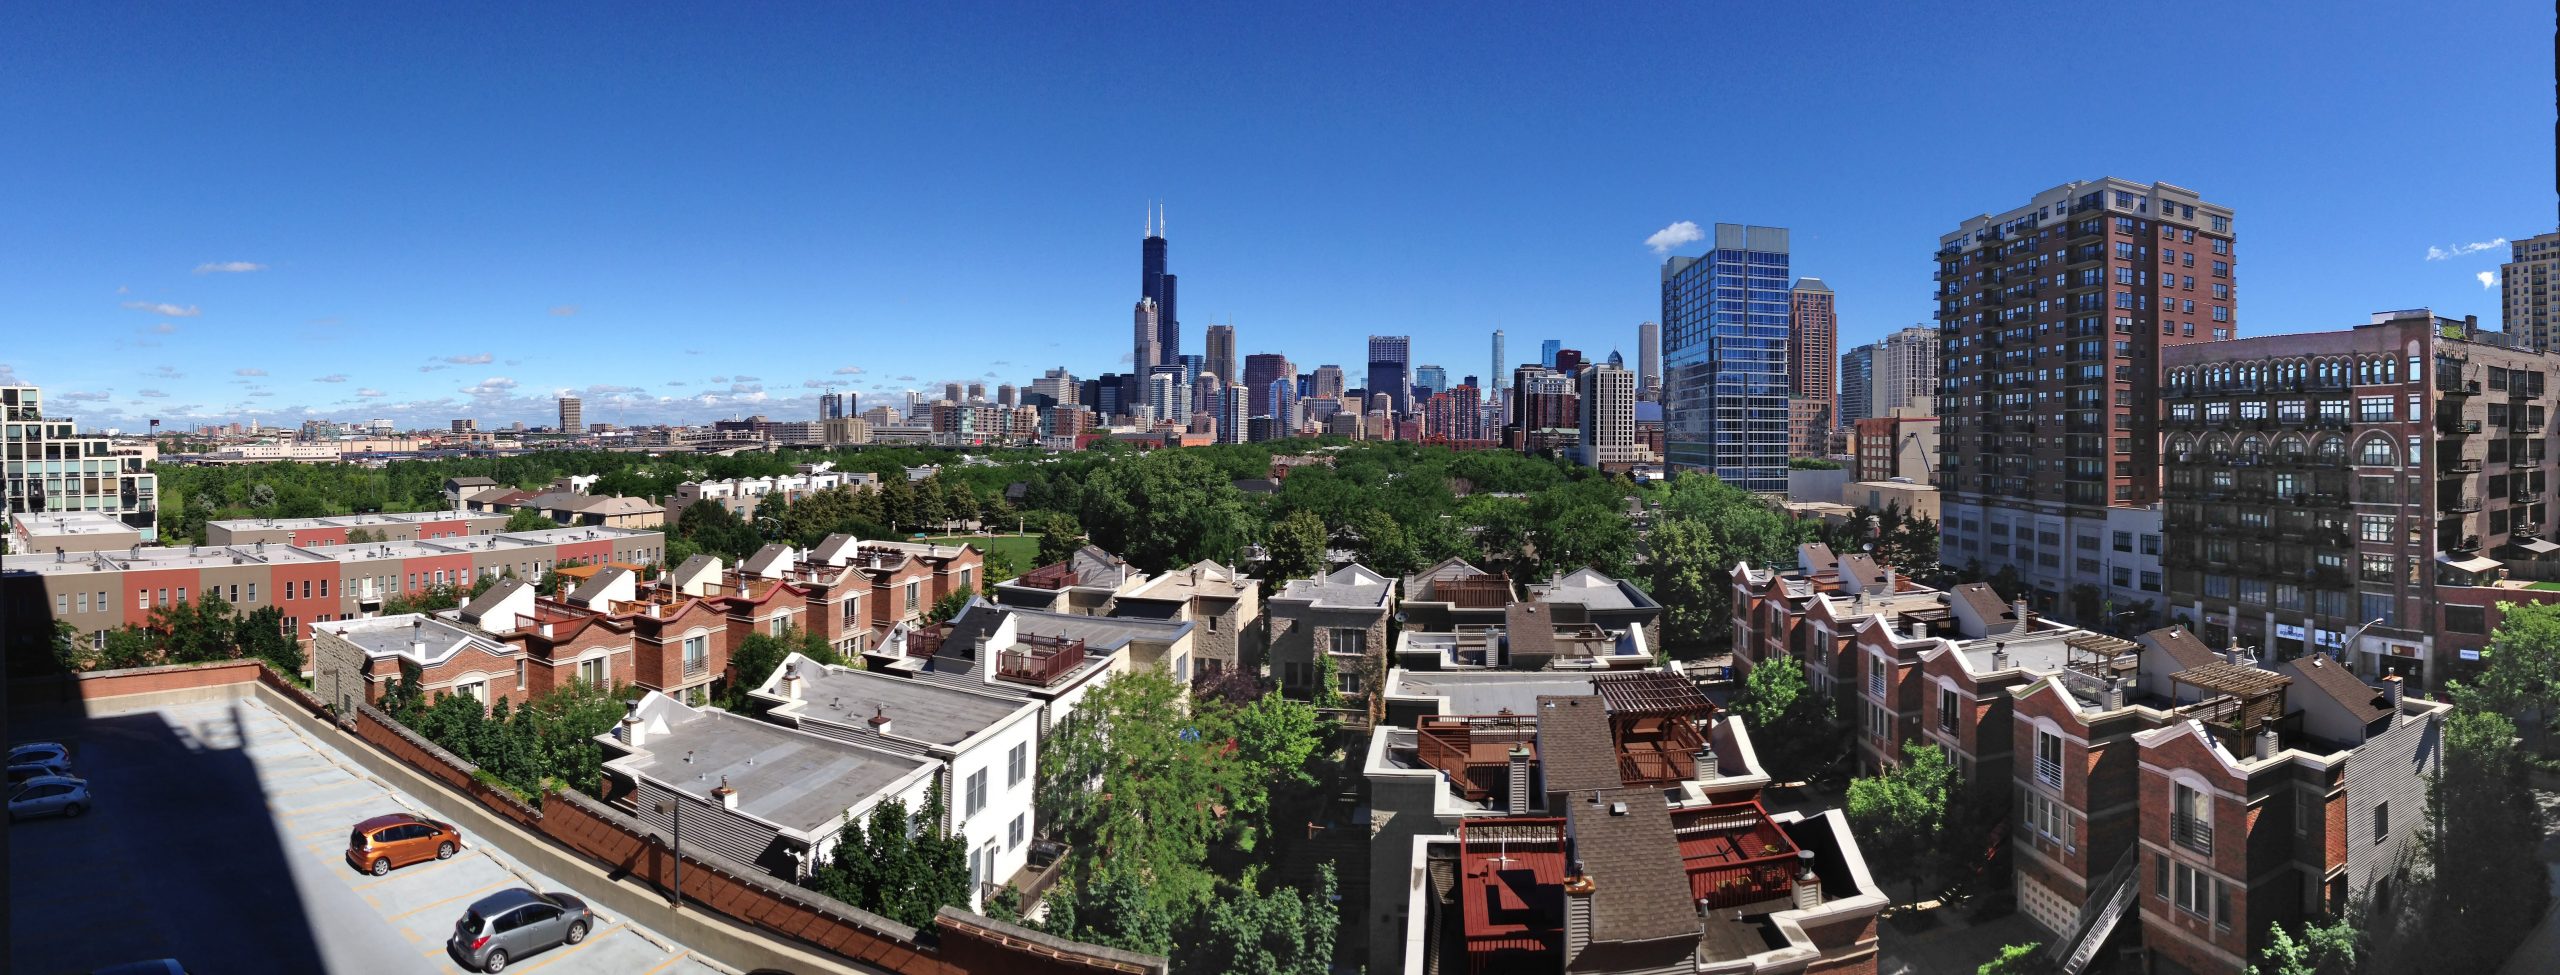 Dearborn Park Chicago mega-development